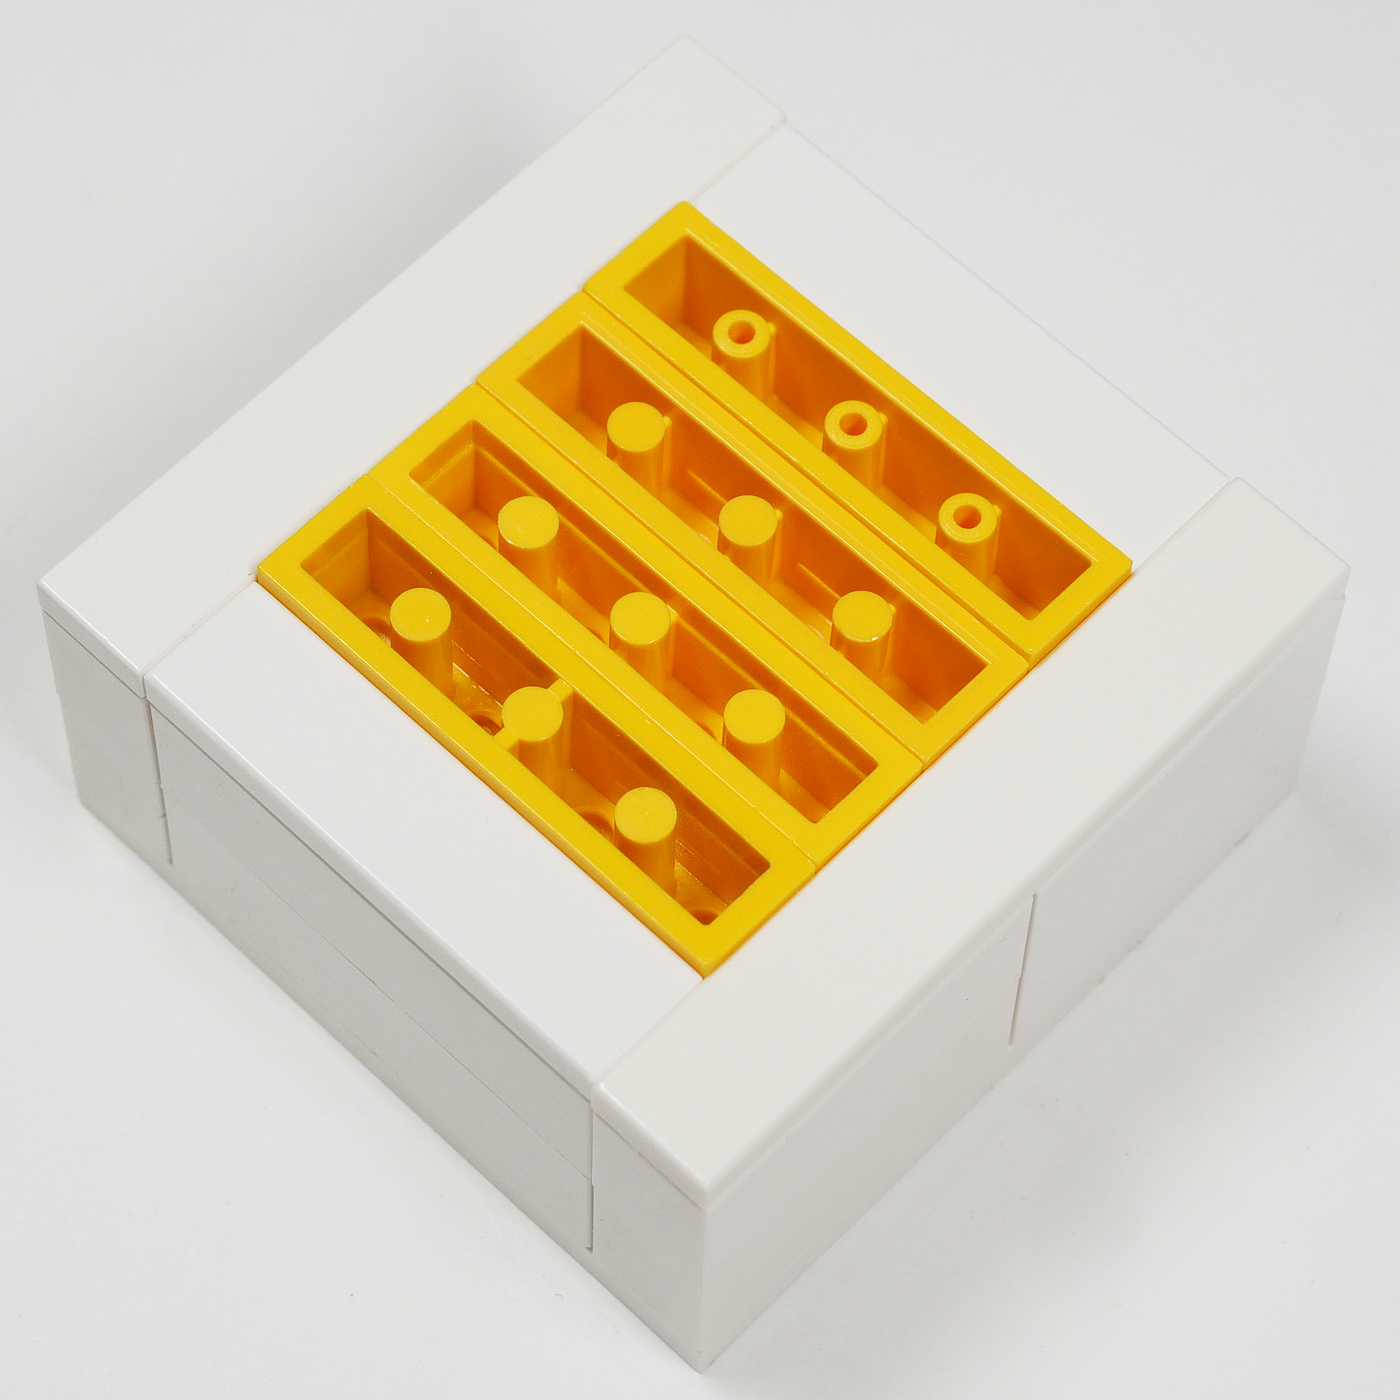 LEGO_p3010_02.jpg